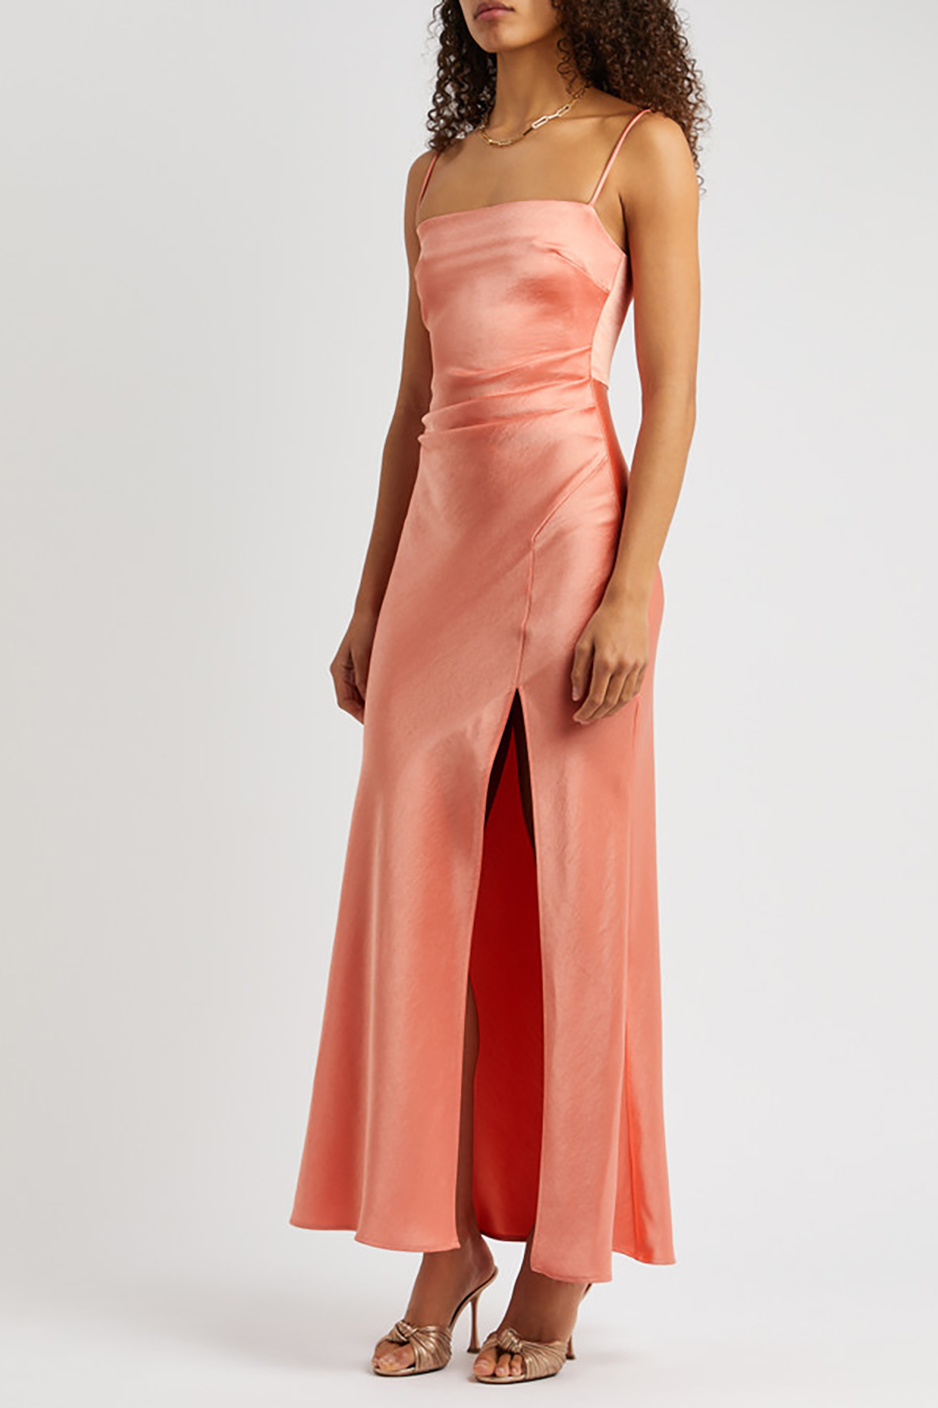 Coral peach bridesmaid dress from Bec & Bridge/ Harvey Nichols with maxi satin design and leg split 